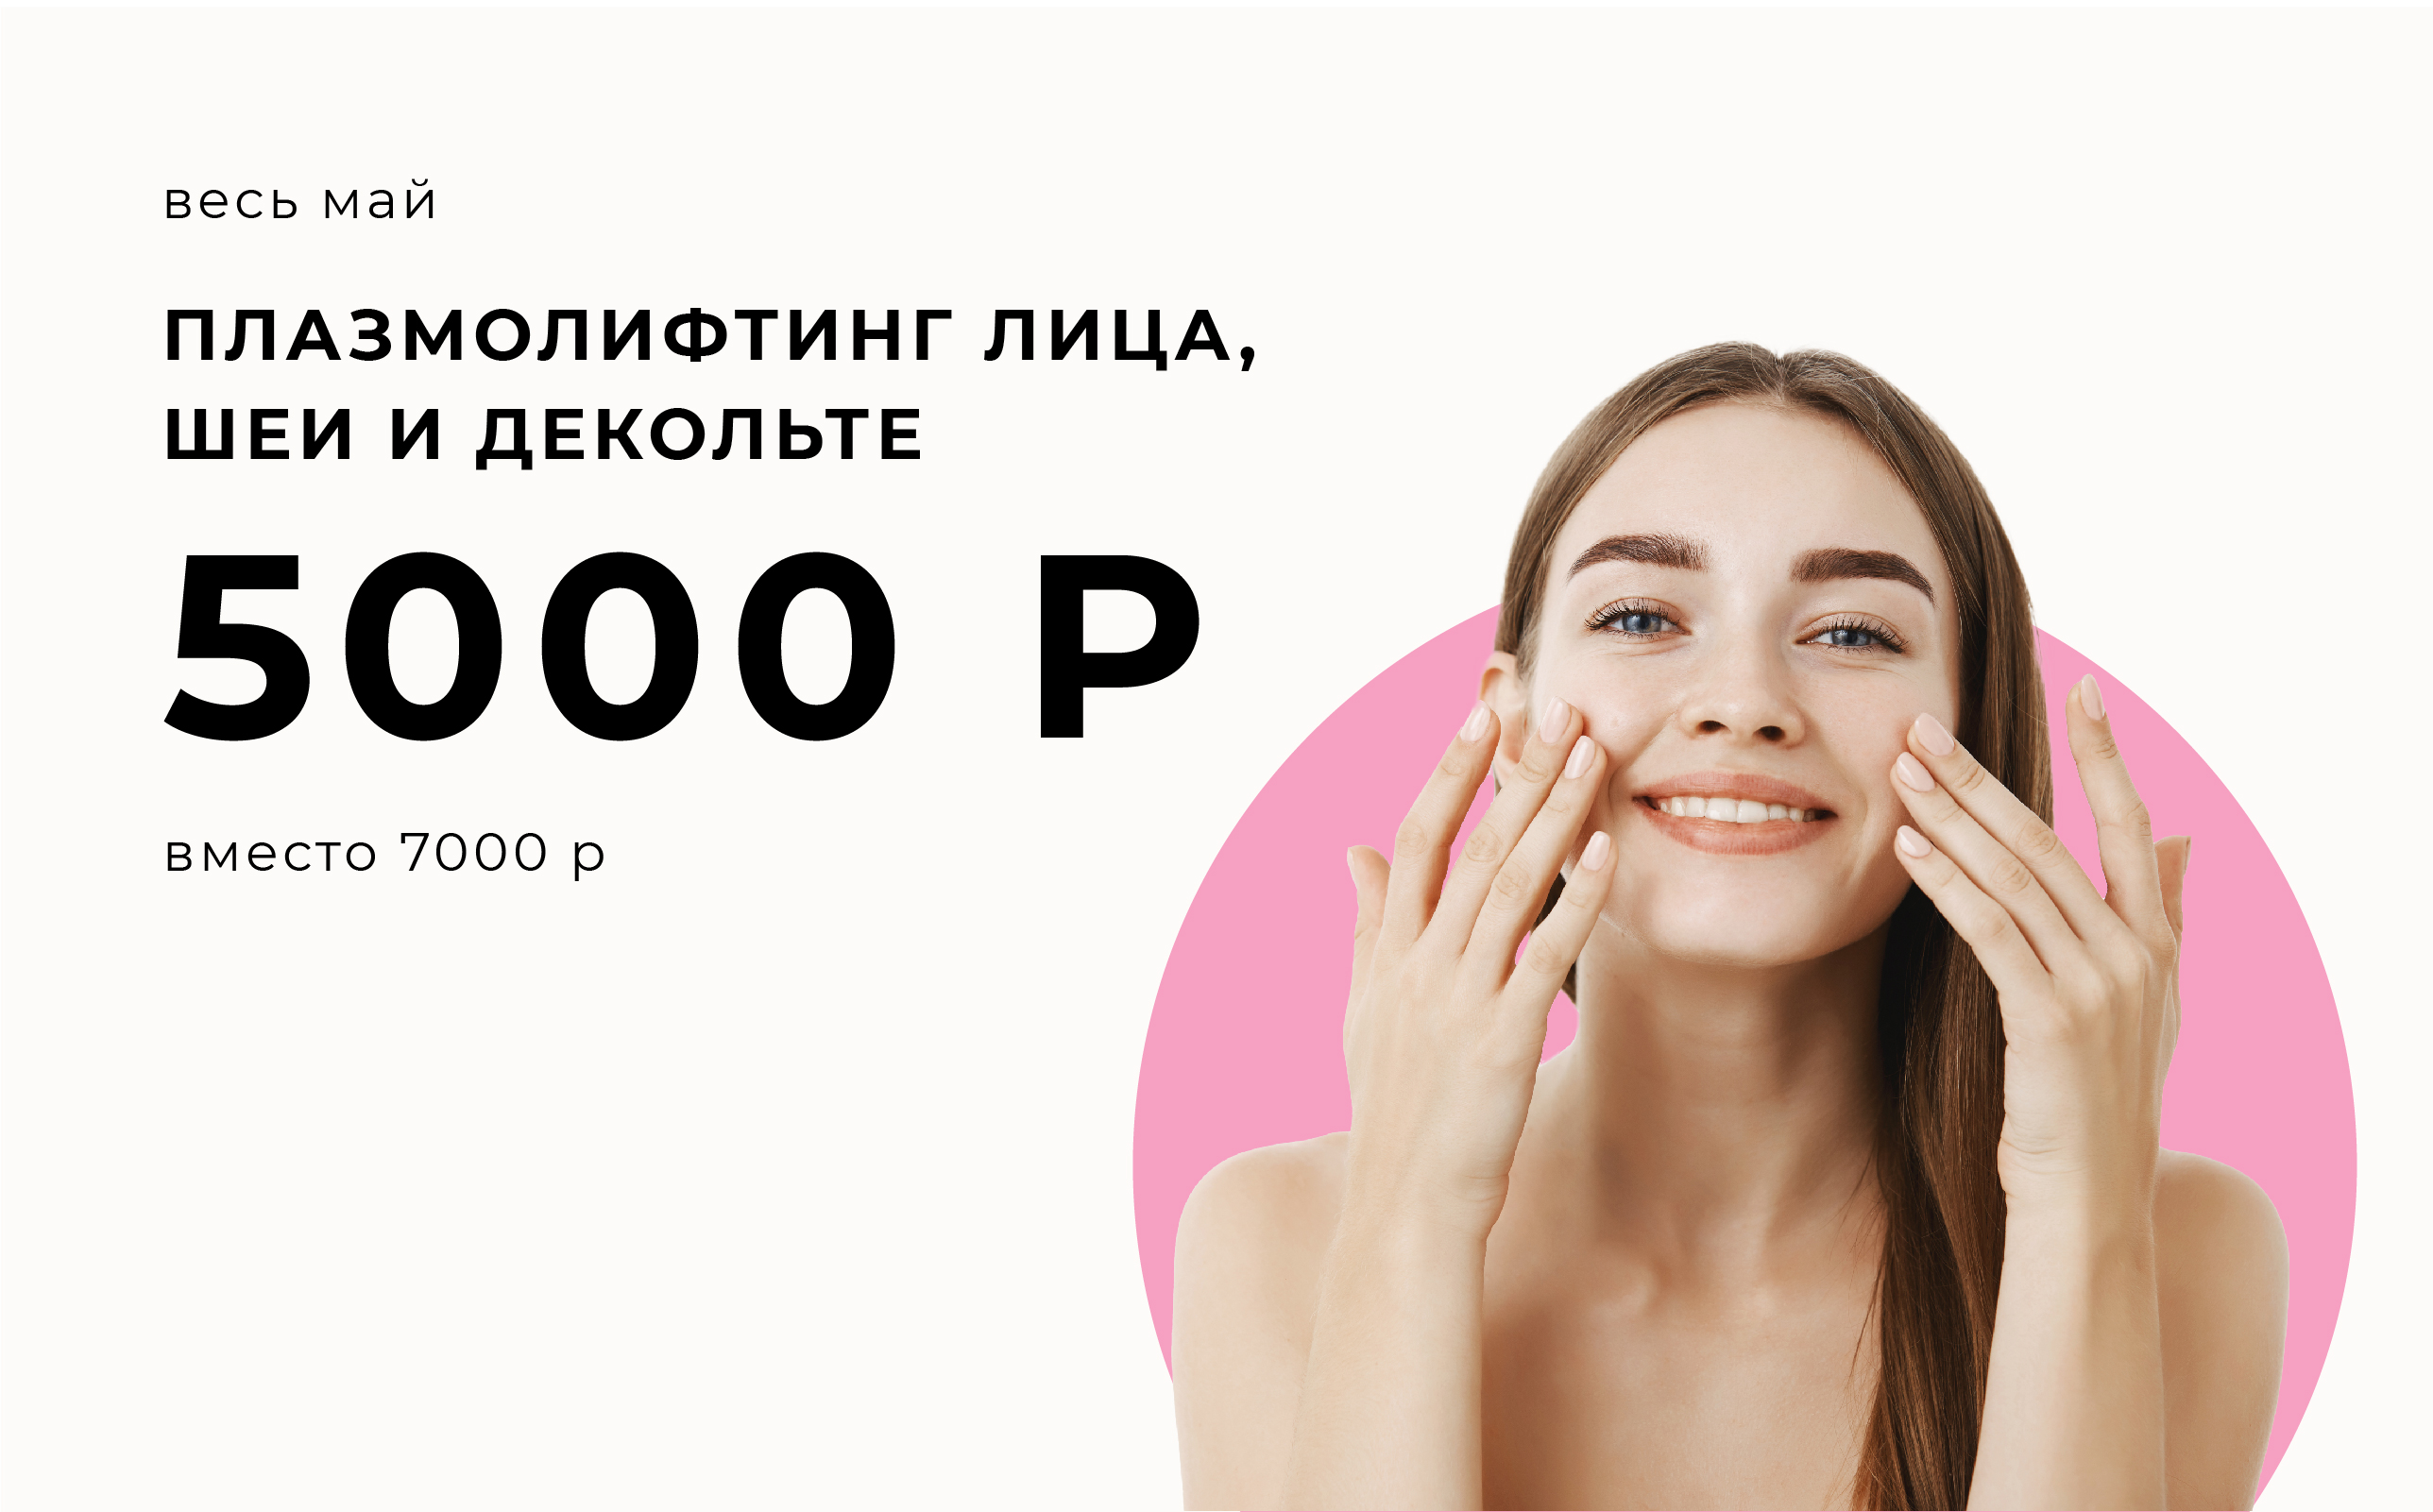 ПЛАЗМОЛИФТИНГ - 5000 ВМЕСТО 7000!